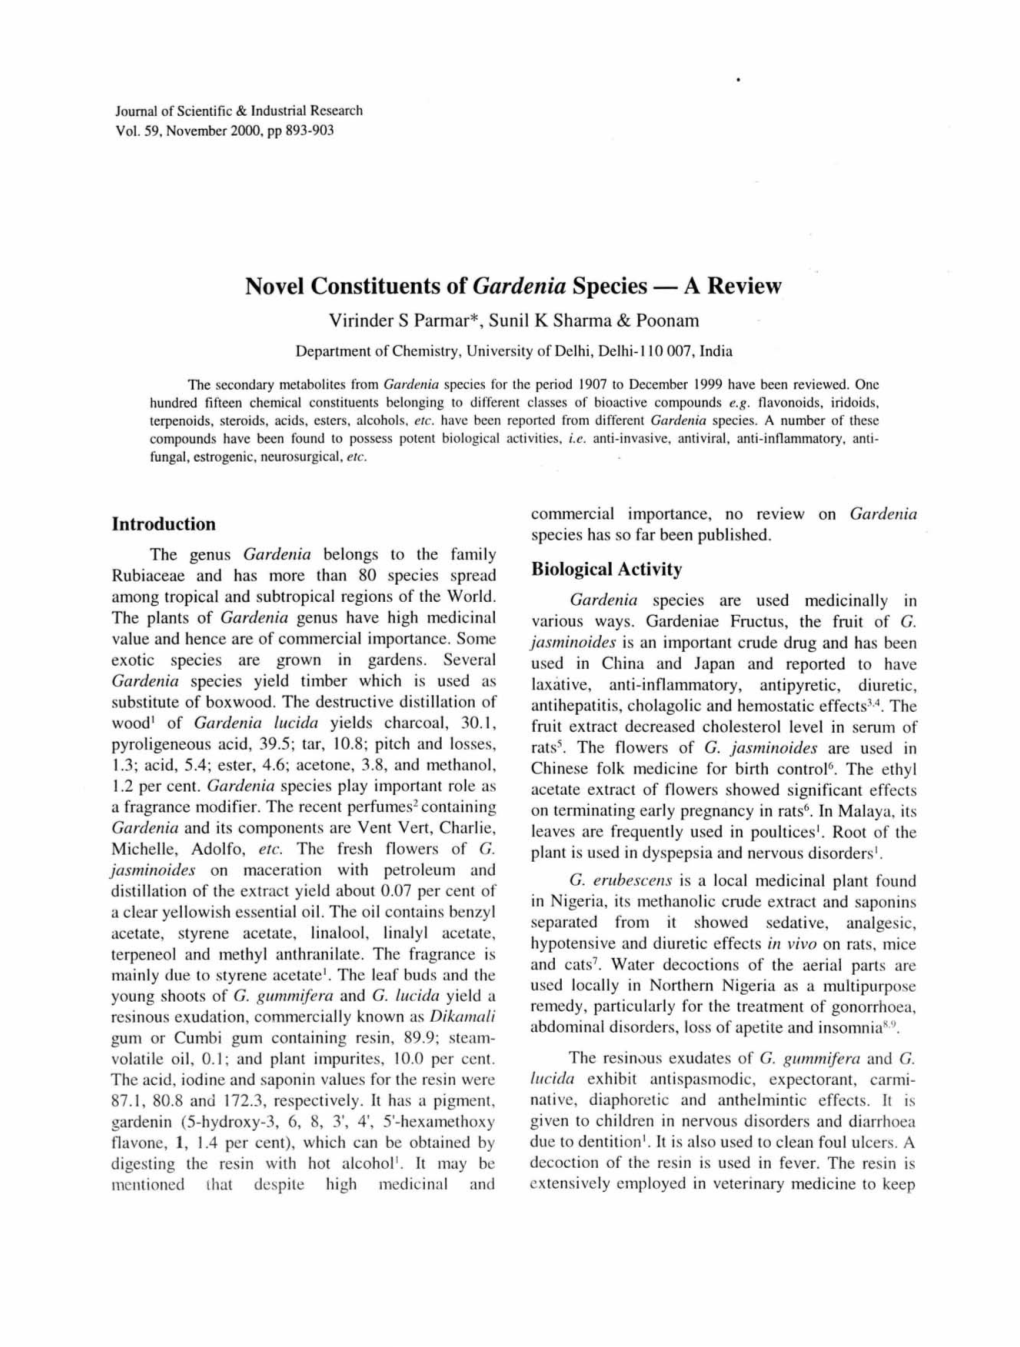 Novel Constituents of Gardenia Species - a Review Virinder S Parmar*, Sunil K Sharma & Poonam Department of Chemistry, University of Delhi, Delhi-It 0 007, India